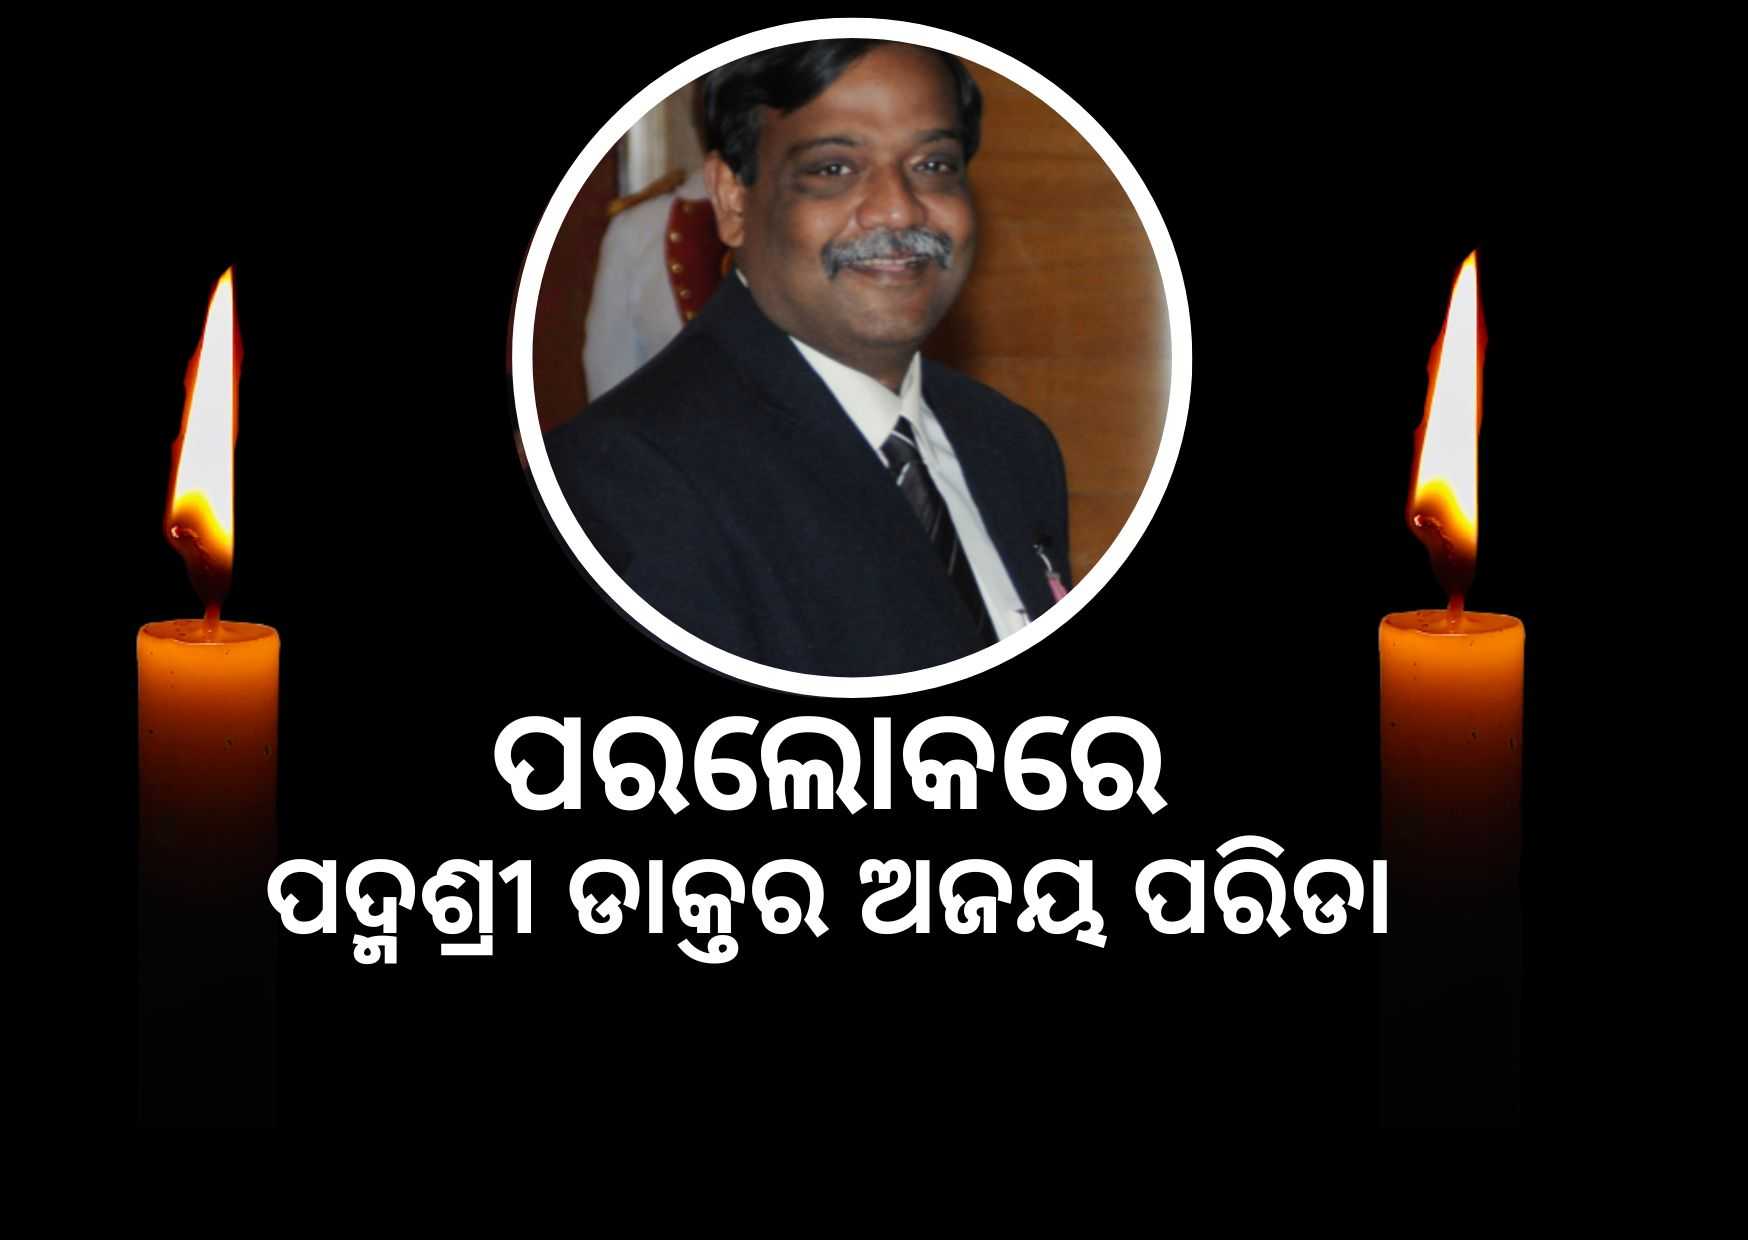 ILS Director Padma Shri Dr Ajay Parida passes away